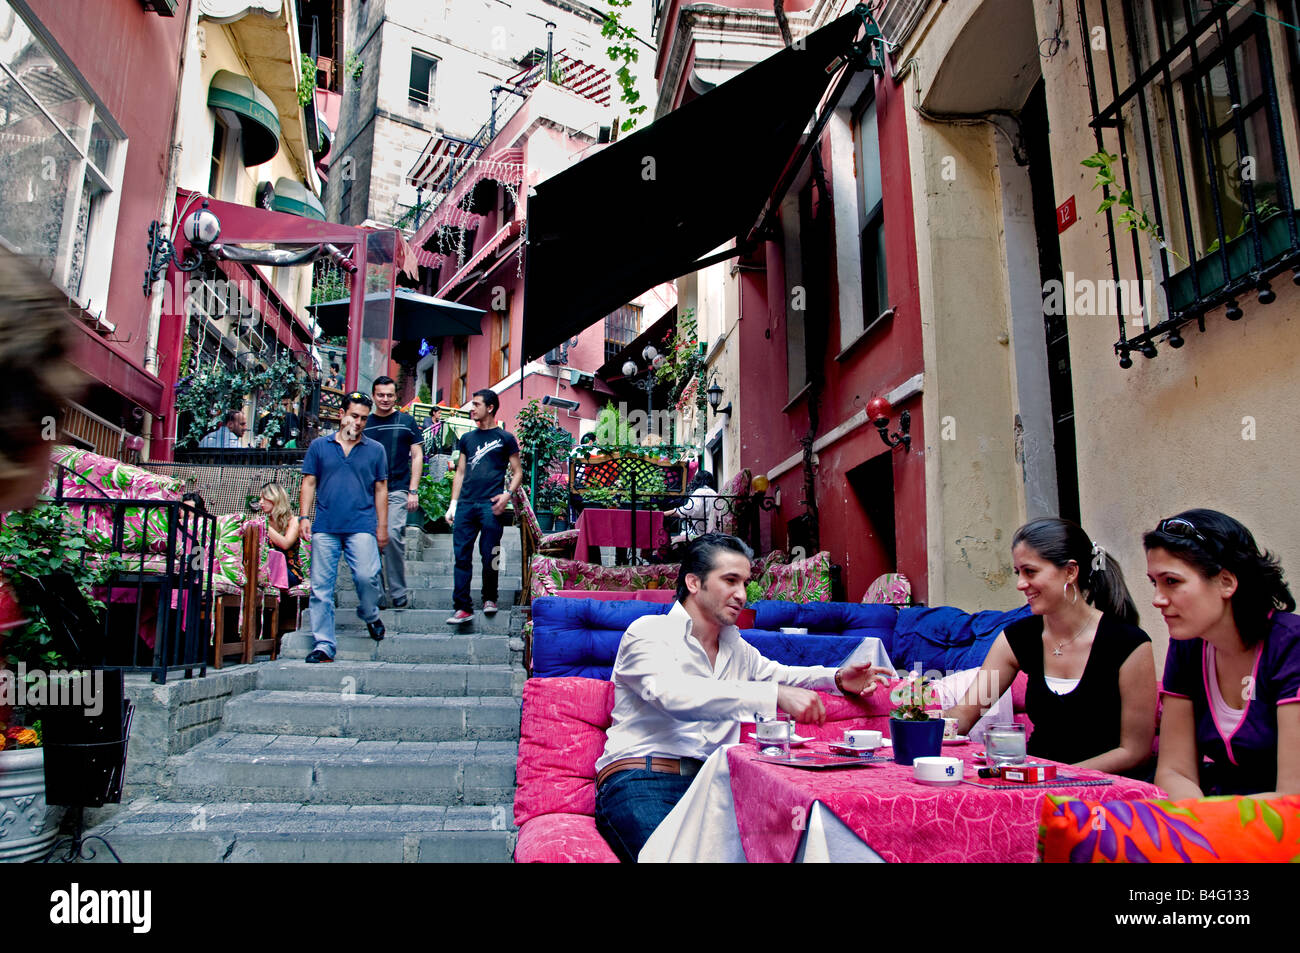 Gli studenti giovani Istanbul Galatasaray Cukurcuma quartiere francese nei pressi di Istiklal Caddesi Beyoglu shopping street Francia Foto Stock